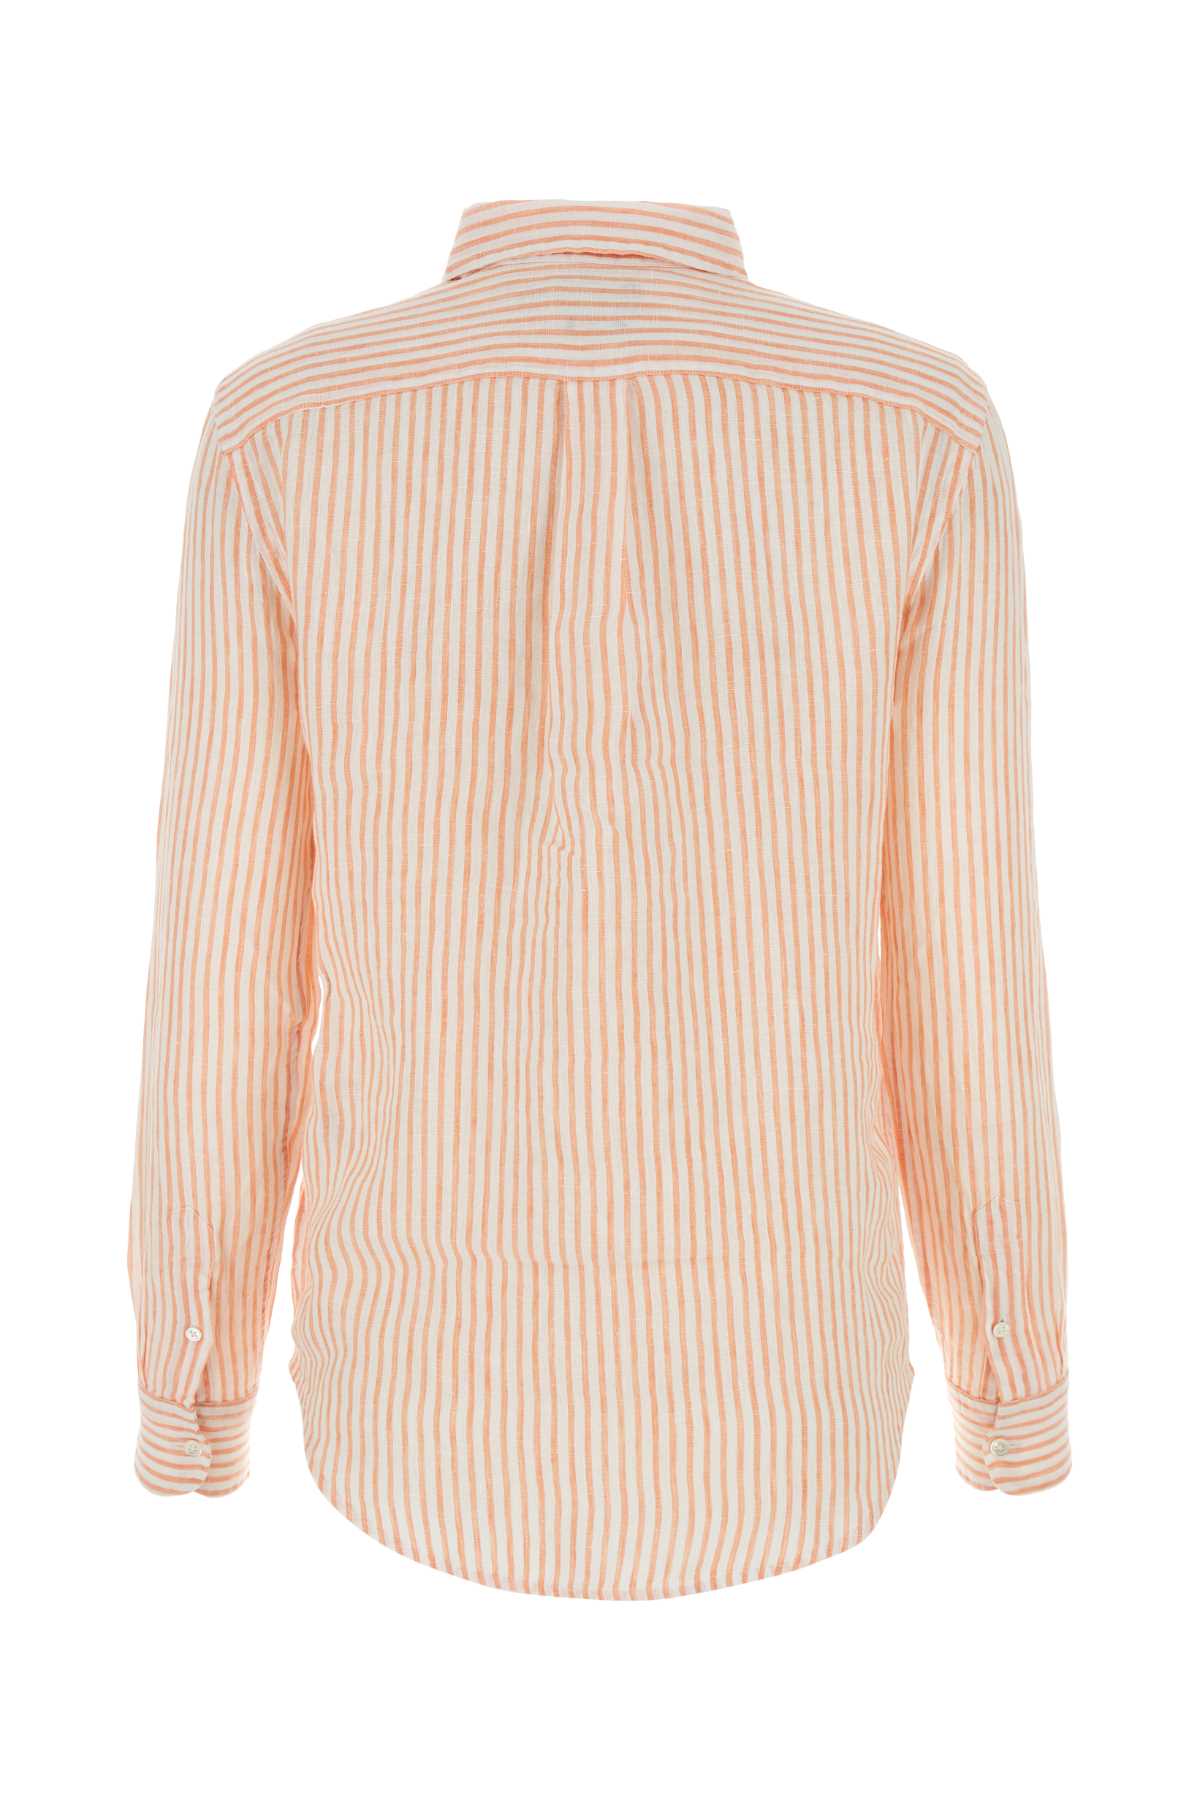 Polo Ralph Lauren Embroidered Linen Shirt In Sunfadeorange/whtestrp